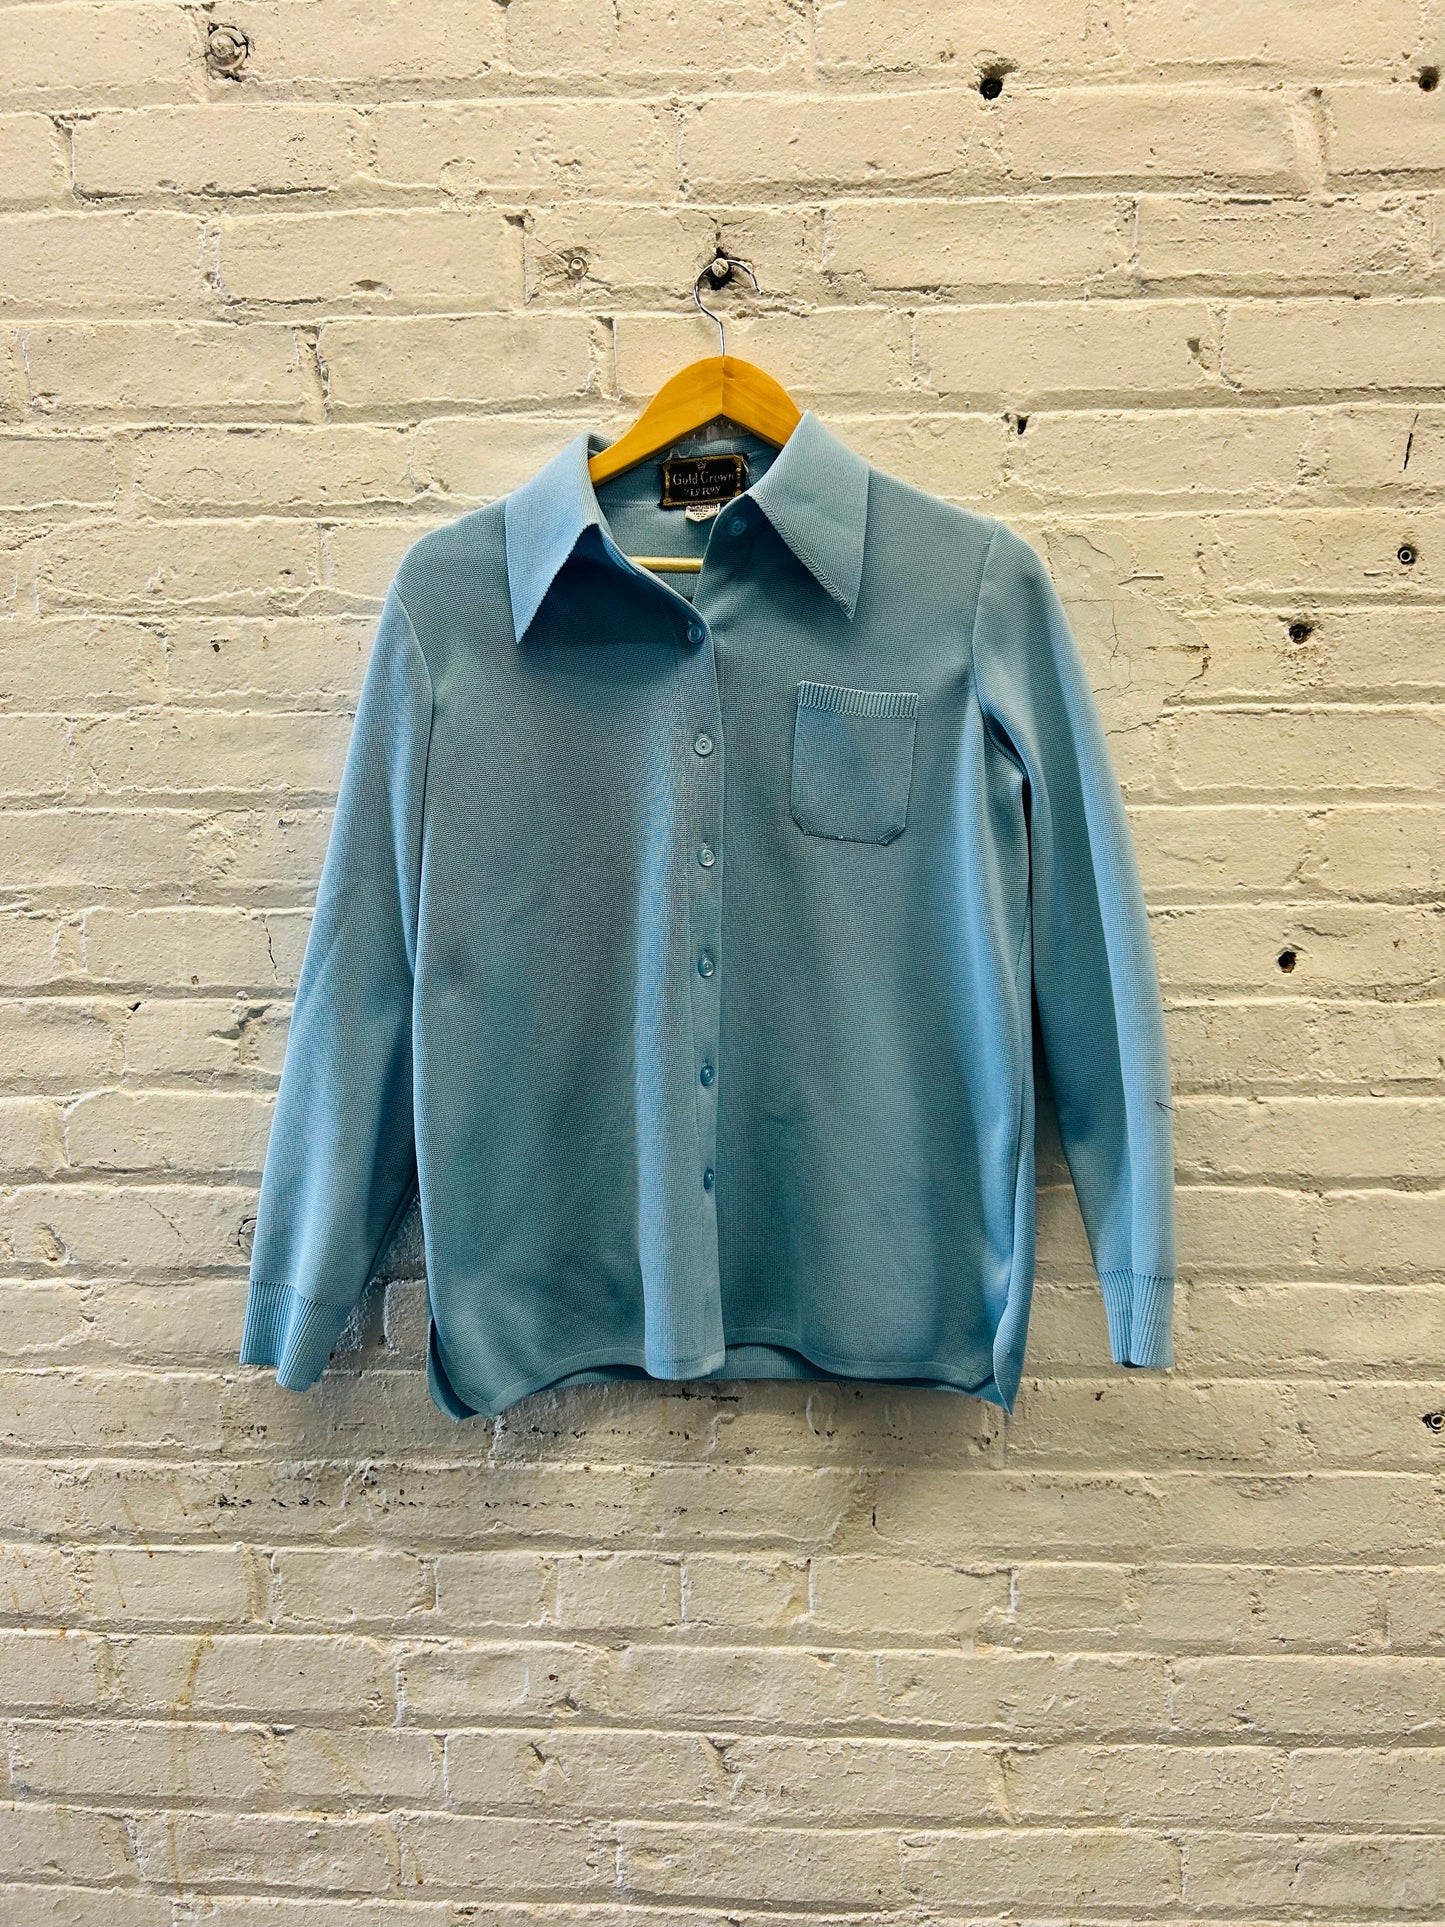 Ice Blue Collared Knit Shirt - Medium